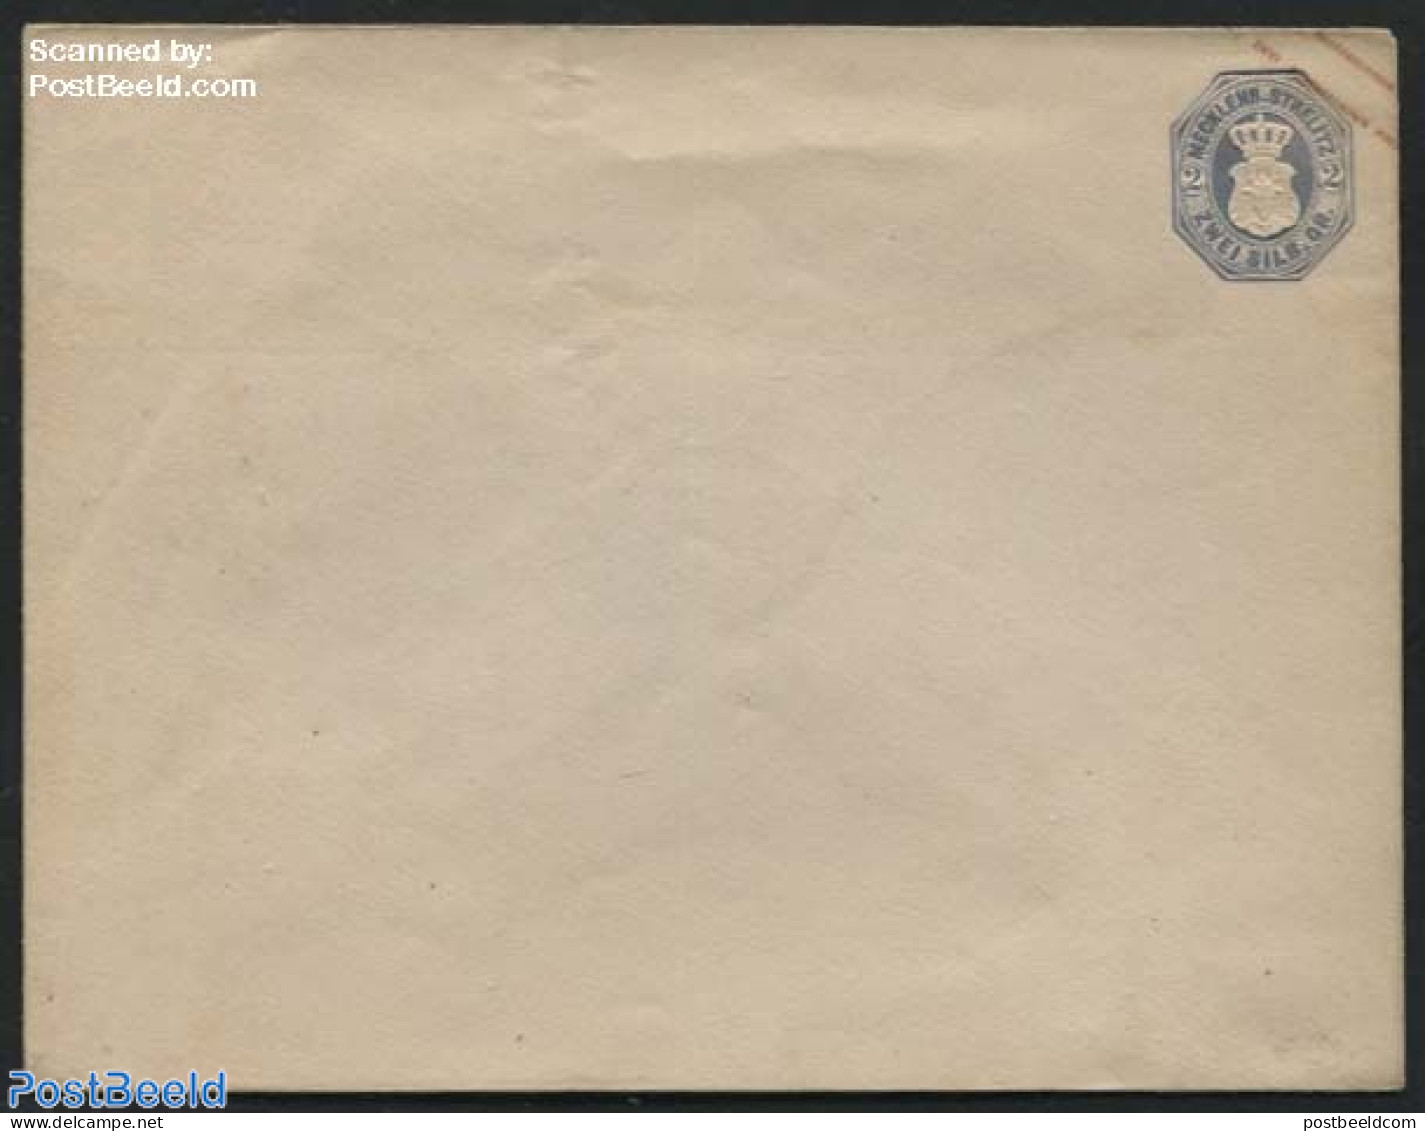 Germany, Mecklenburg-Strelitz 1864 Envelope 2sgr Blue, 148x115mm, Unused Postal Stationary - Mecklenburg-Strelitz